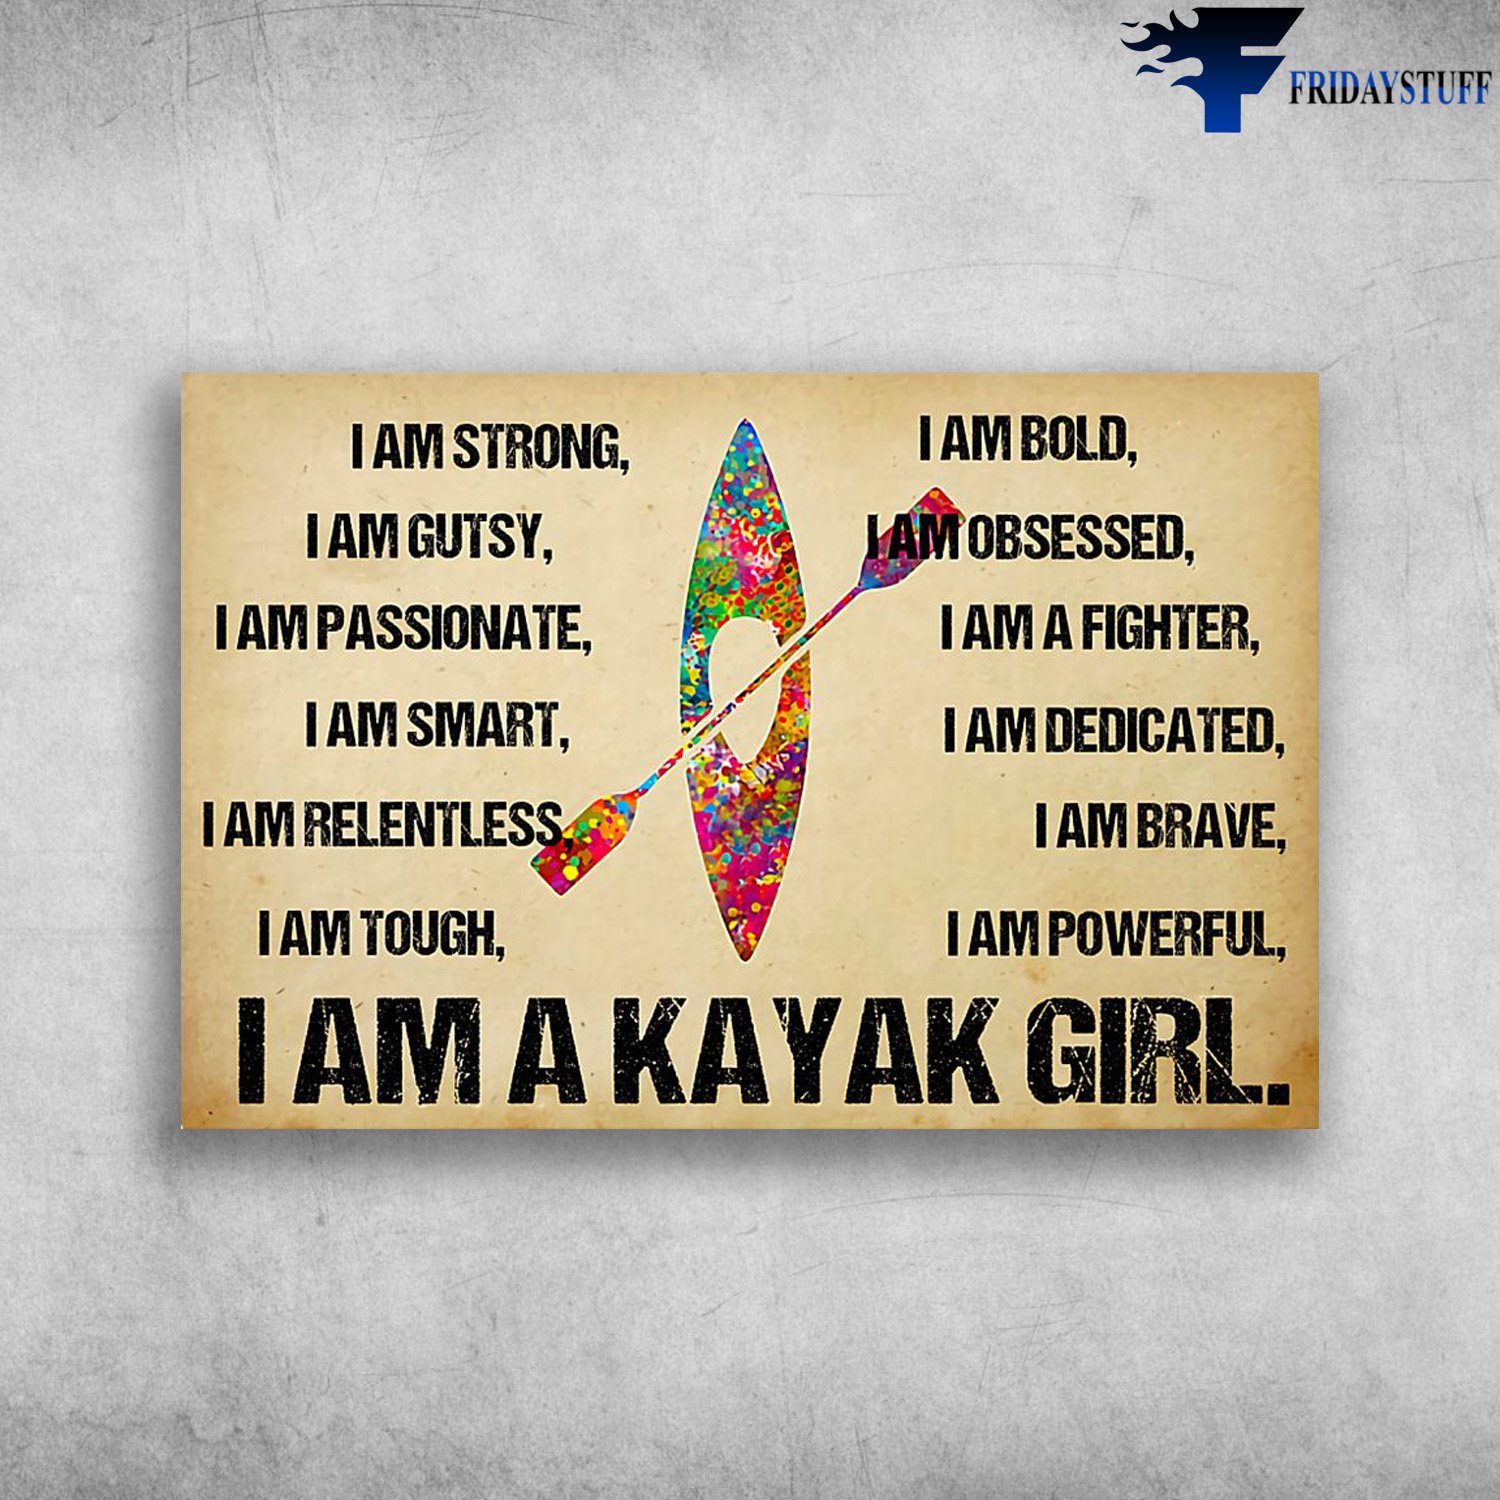 The Kayak - I Am Strong, I Am Gutsy, I Am Passionate, I Am Smart, I Am Relentless, I Am Tough, I Am Bold, I Am Obsessed, I Am A Fighter, I Am Dedicated, I Am Brave, I Am Powerful, I Am A Kayak Girl